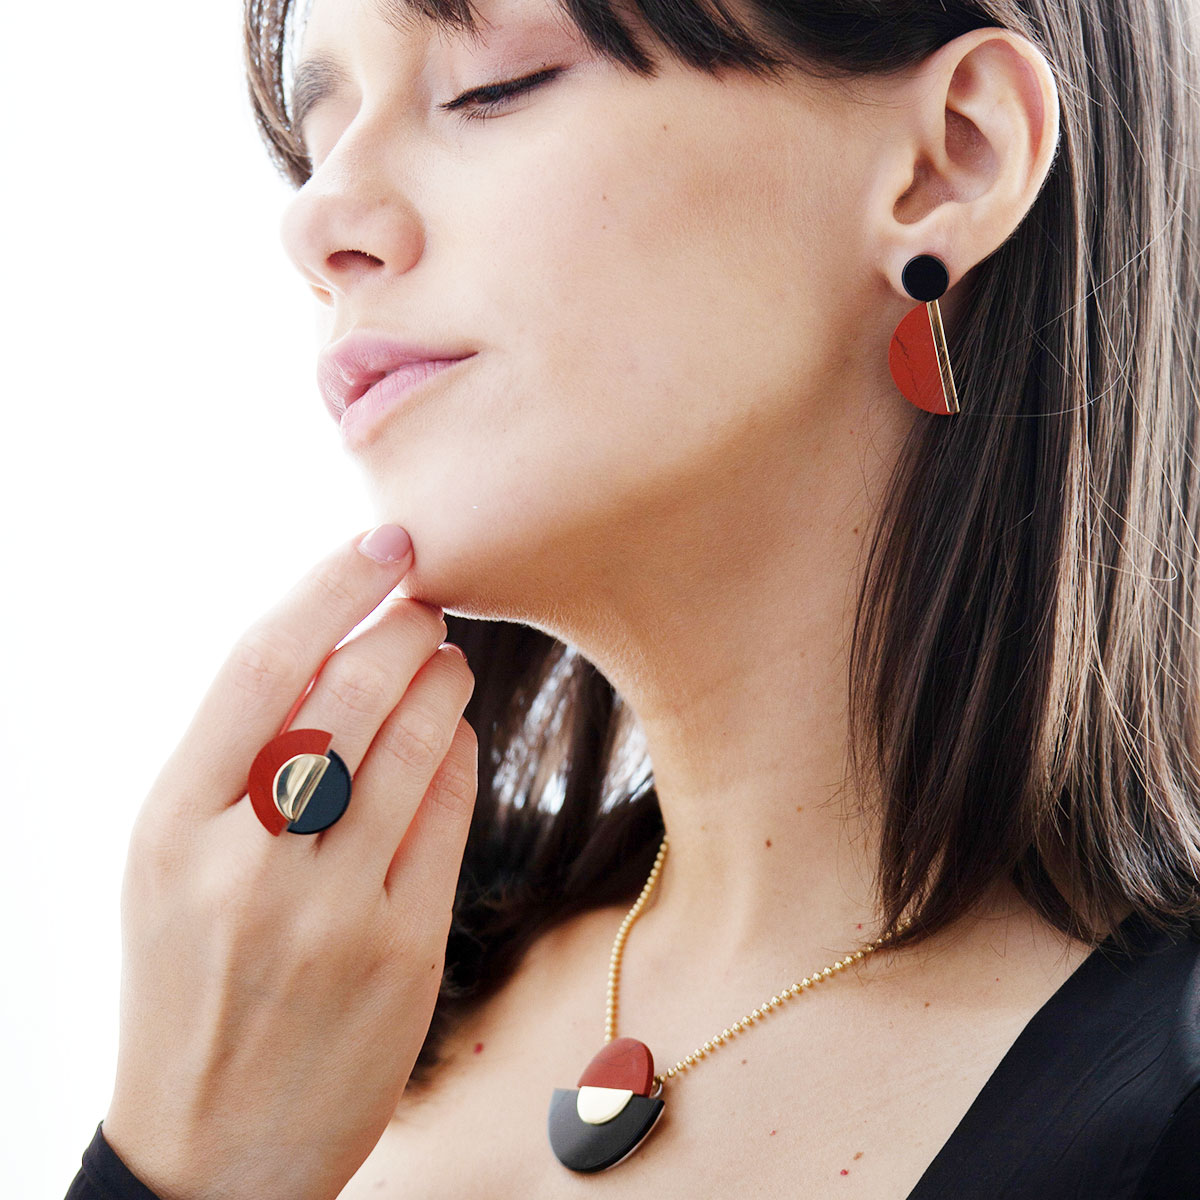 Ana handmade earrings in 9k or 18k gold, sterling silver, circular onyx and red jasper designed by Belen Bajo m1